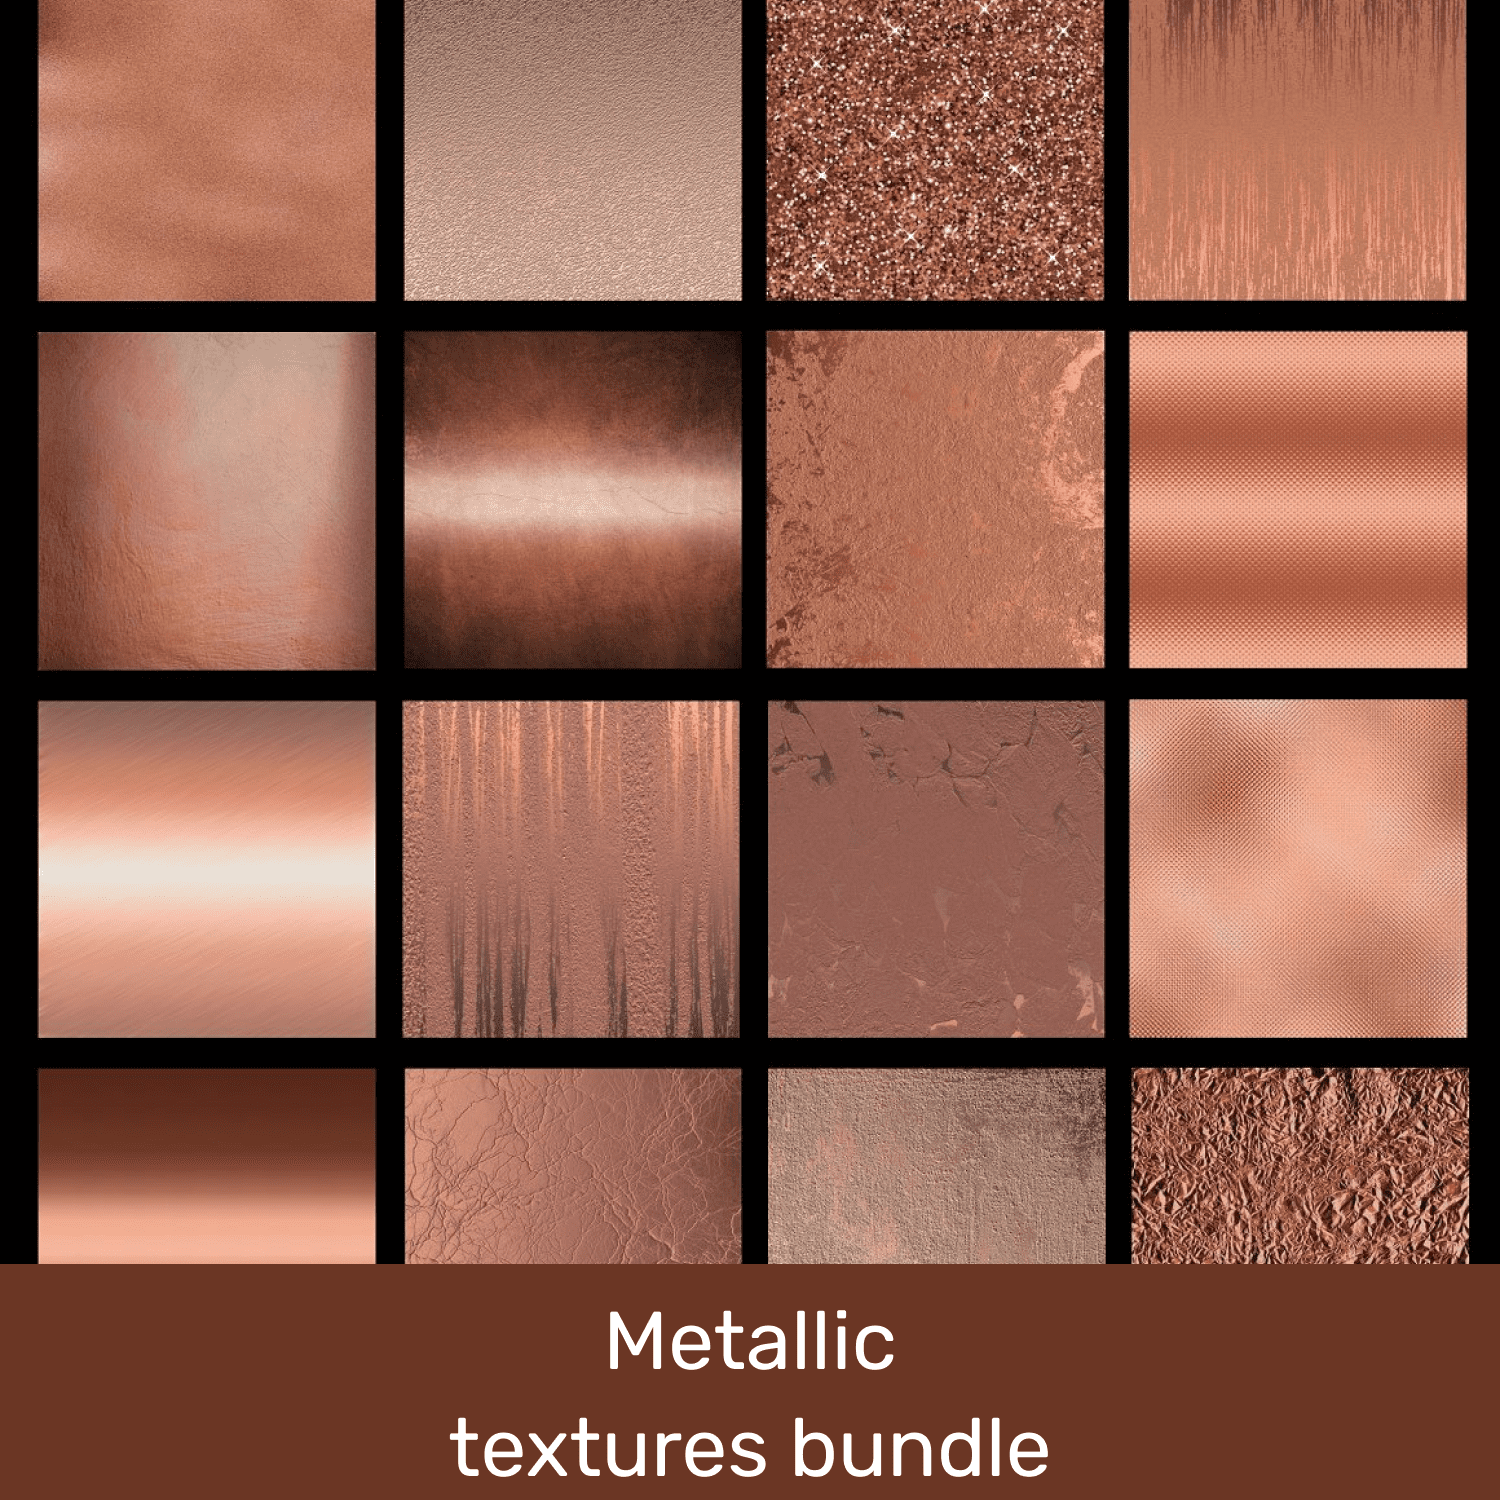 Metallic textures bundle cover.